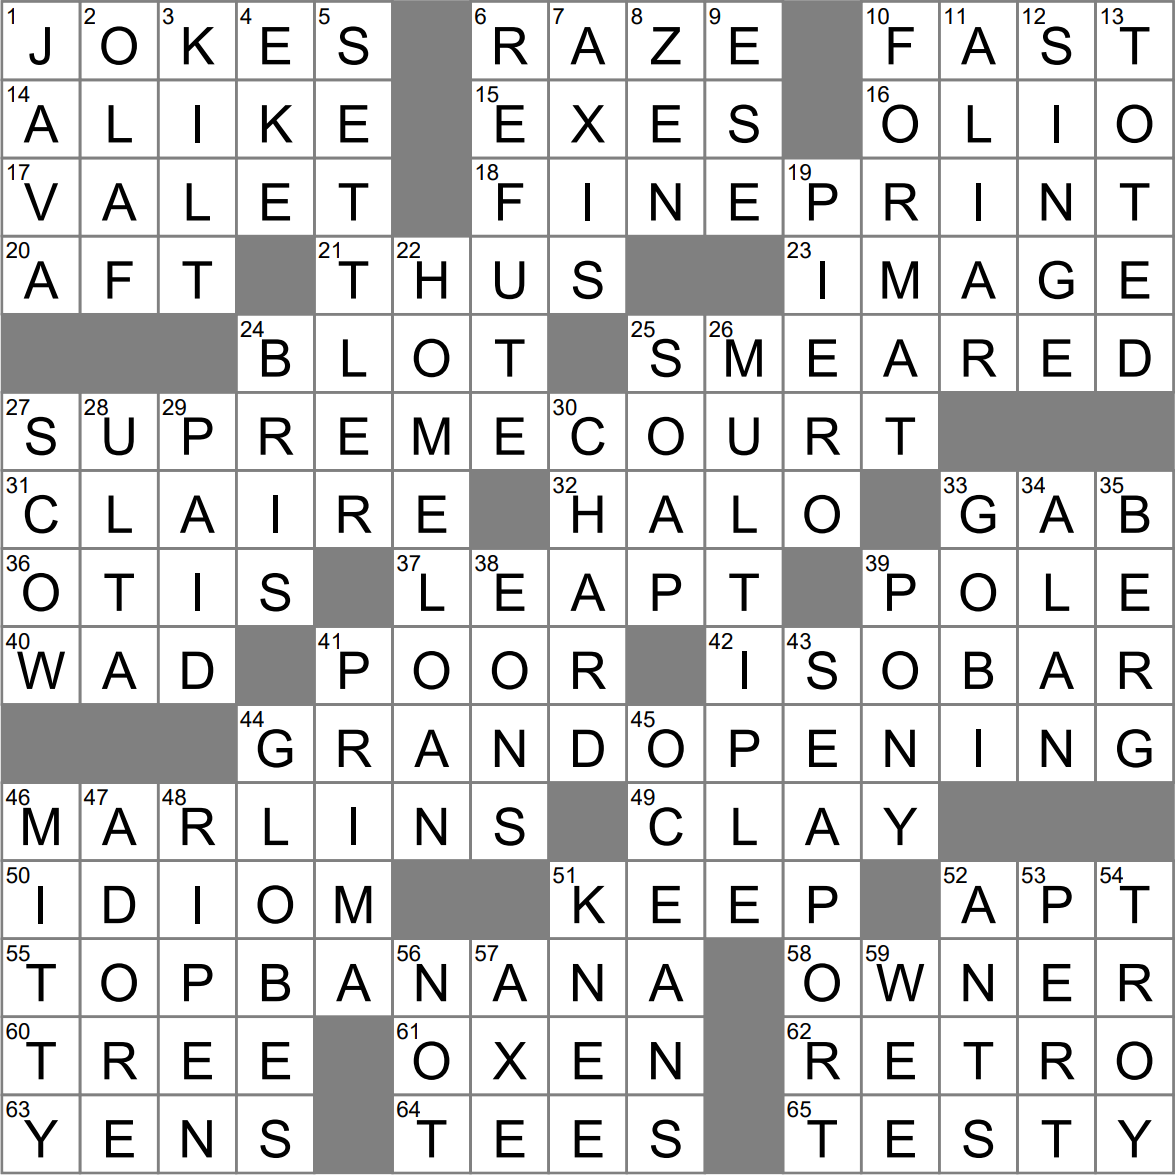 Donald Glover #39 s quot Community quot role crossword clue Archives LAXCrossword com